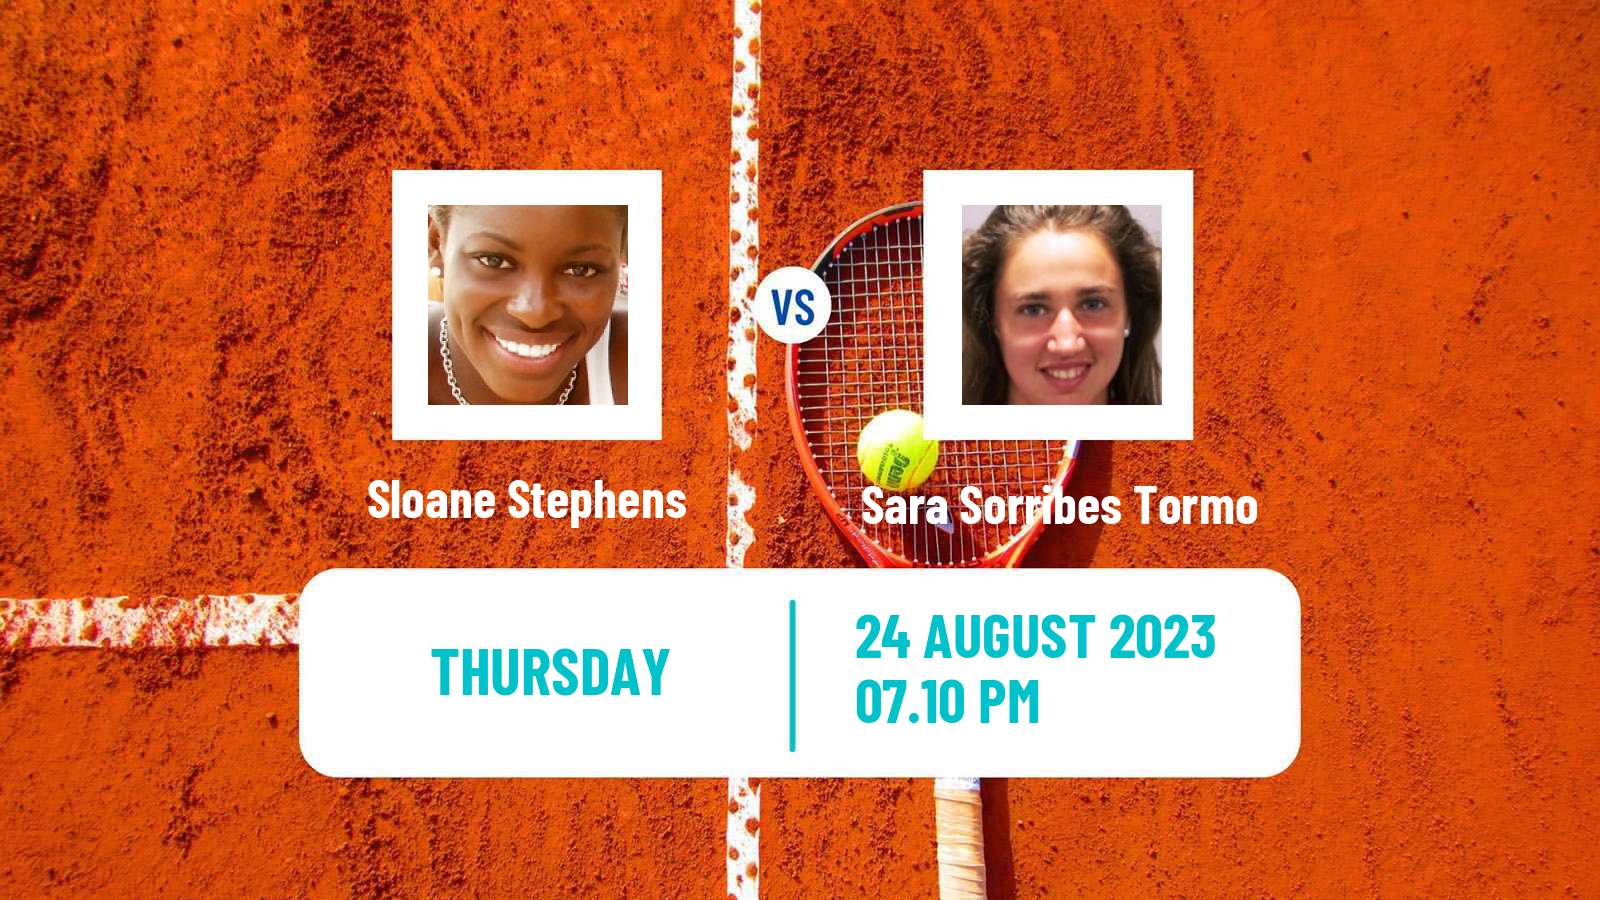 Tennis WTA Cleveland Sloane Stephens - Sara Sorribes Tormo